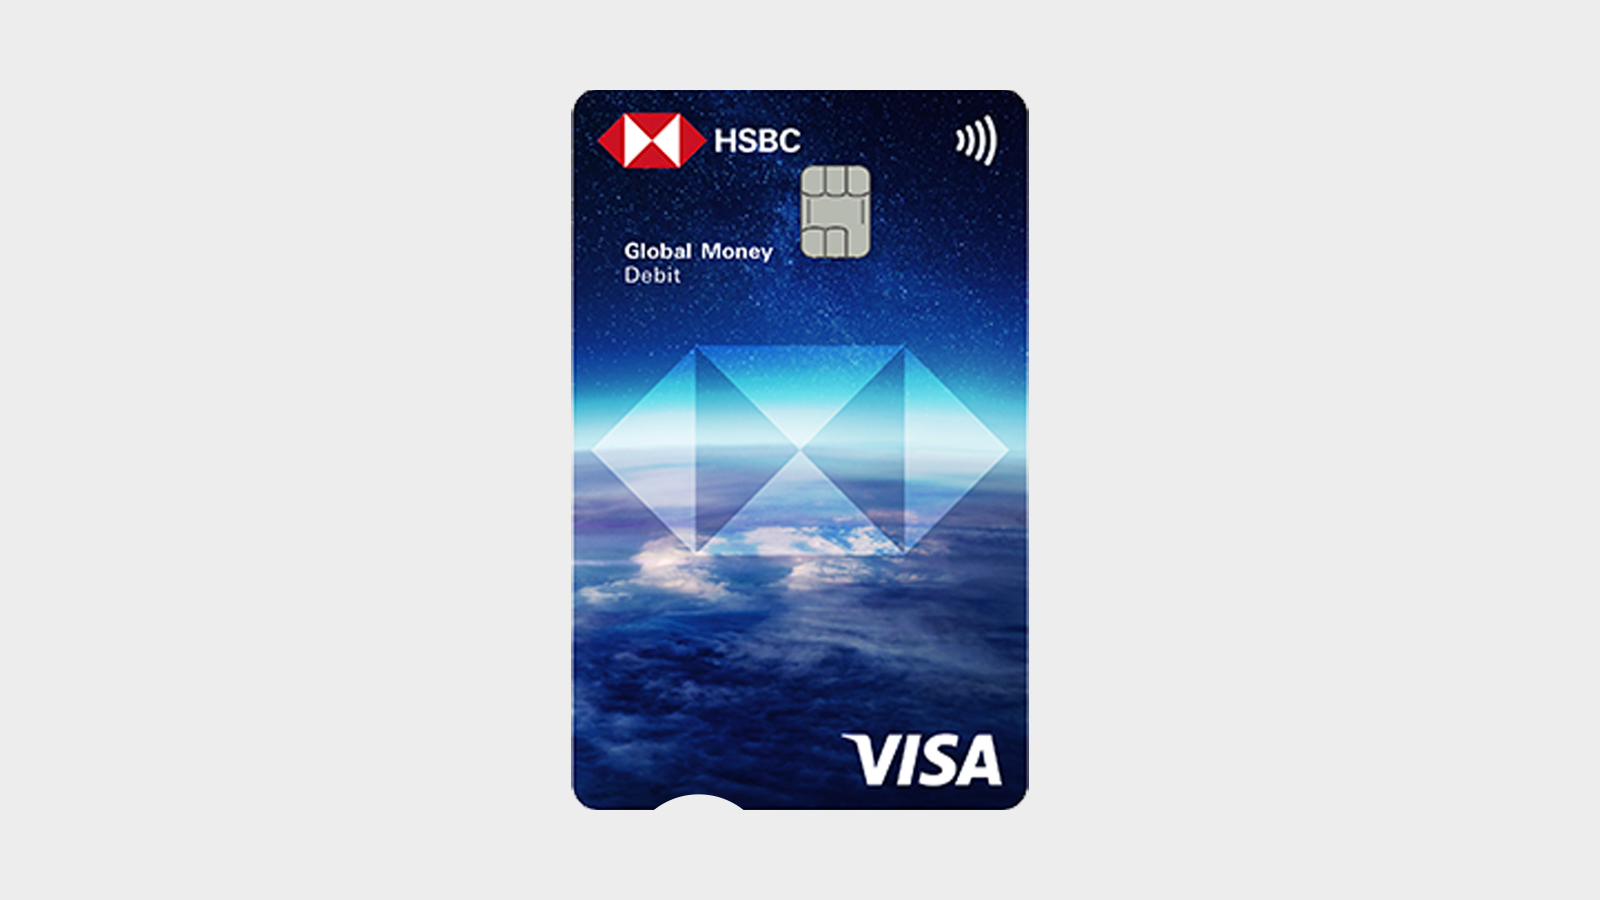 HSBC Global Money Debit card image